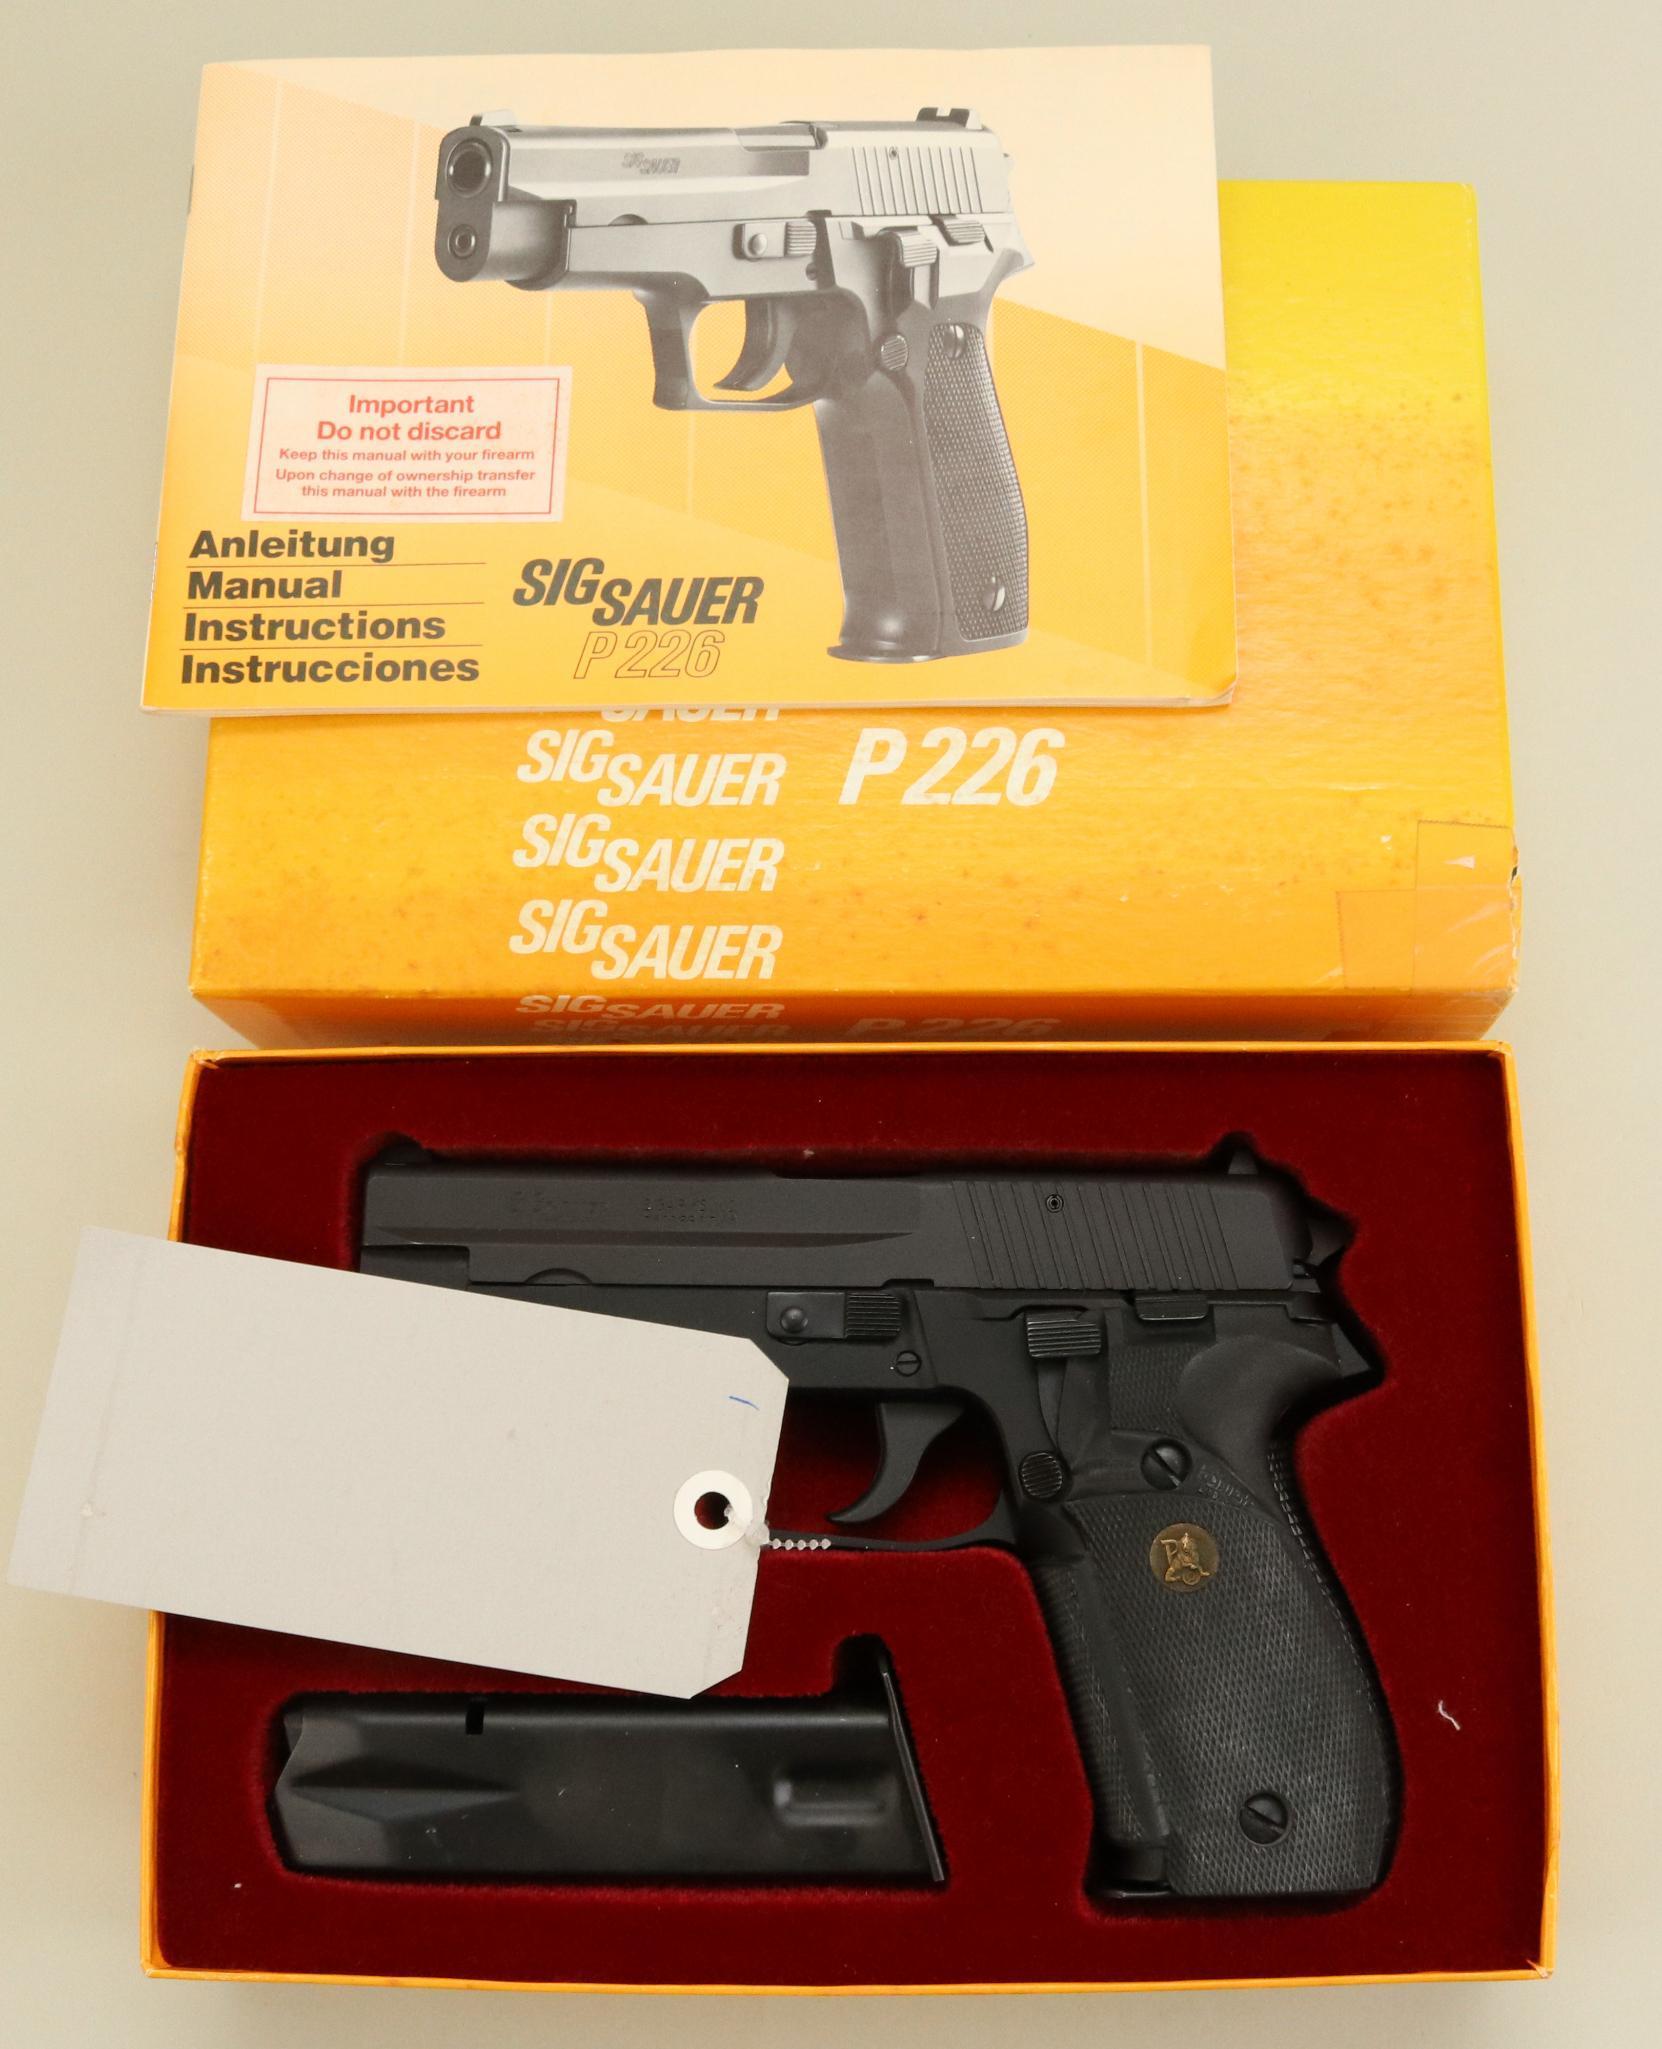 Sig Sauer P226 semi-automatic pistol.